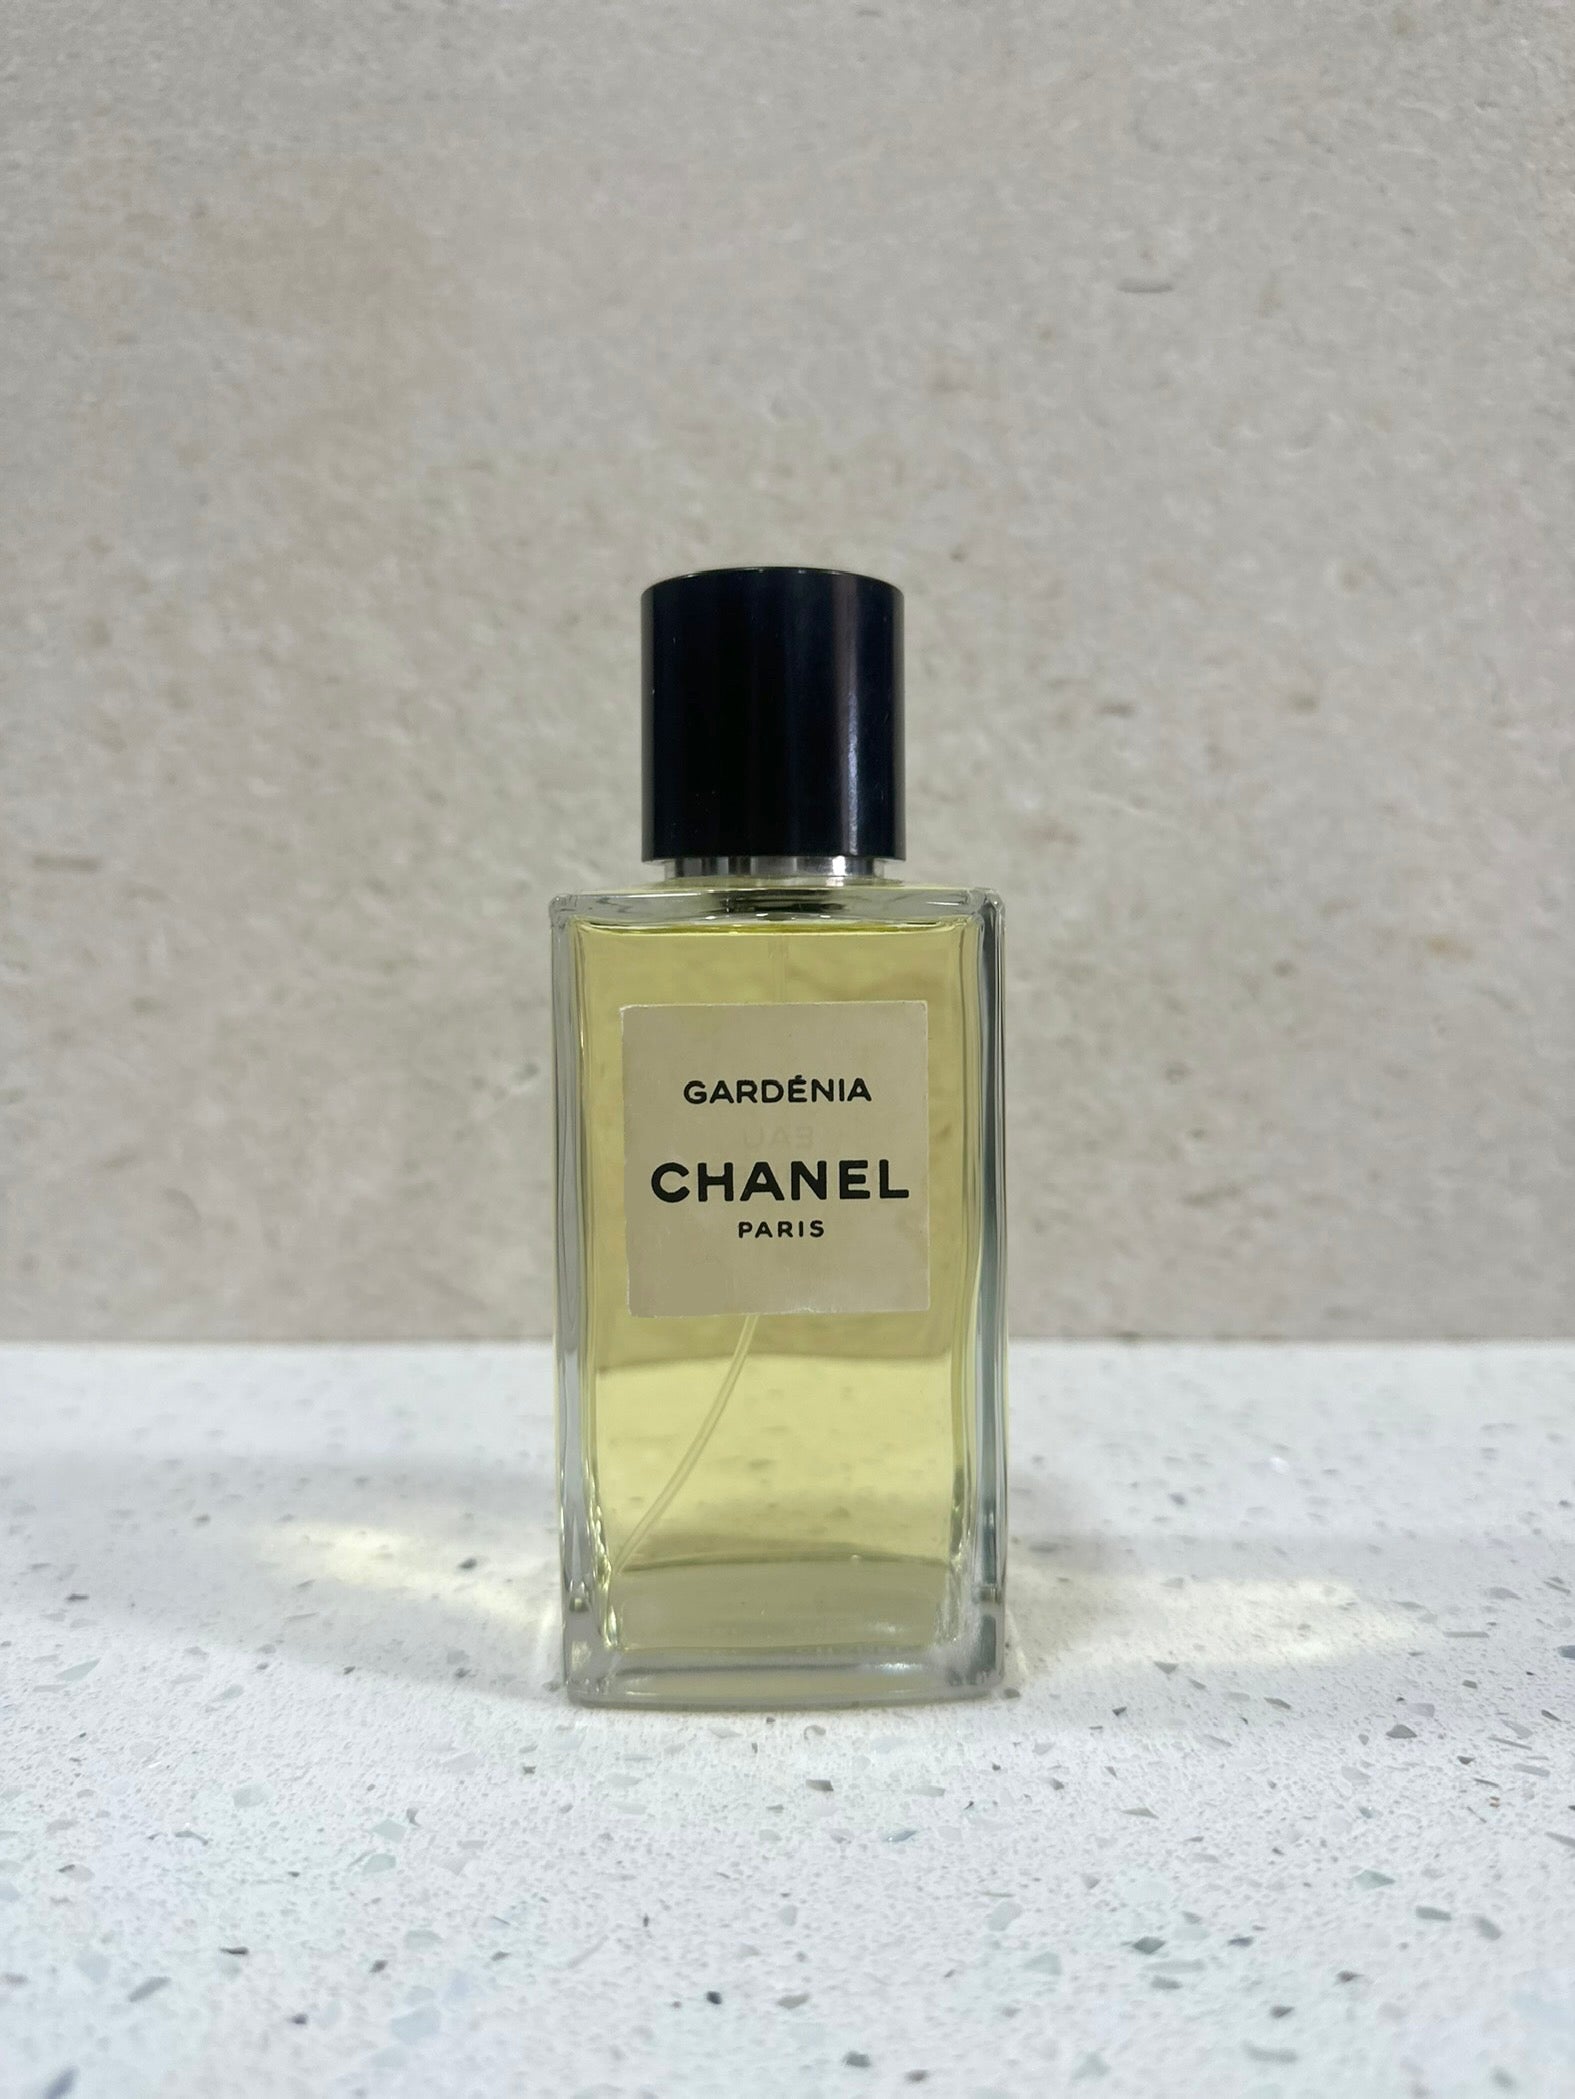 CHANEL GARDÉNIA Les Exclusifs de Chanel - Eau de Parfum